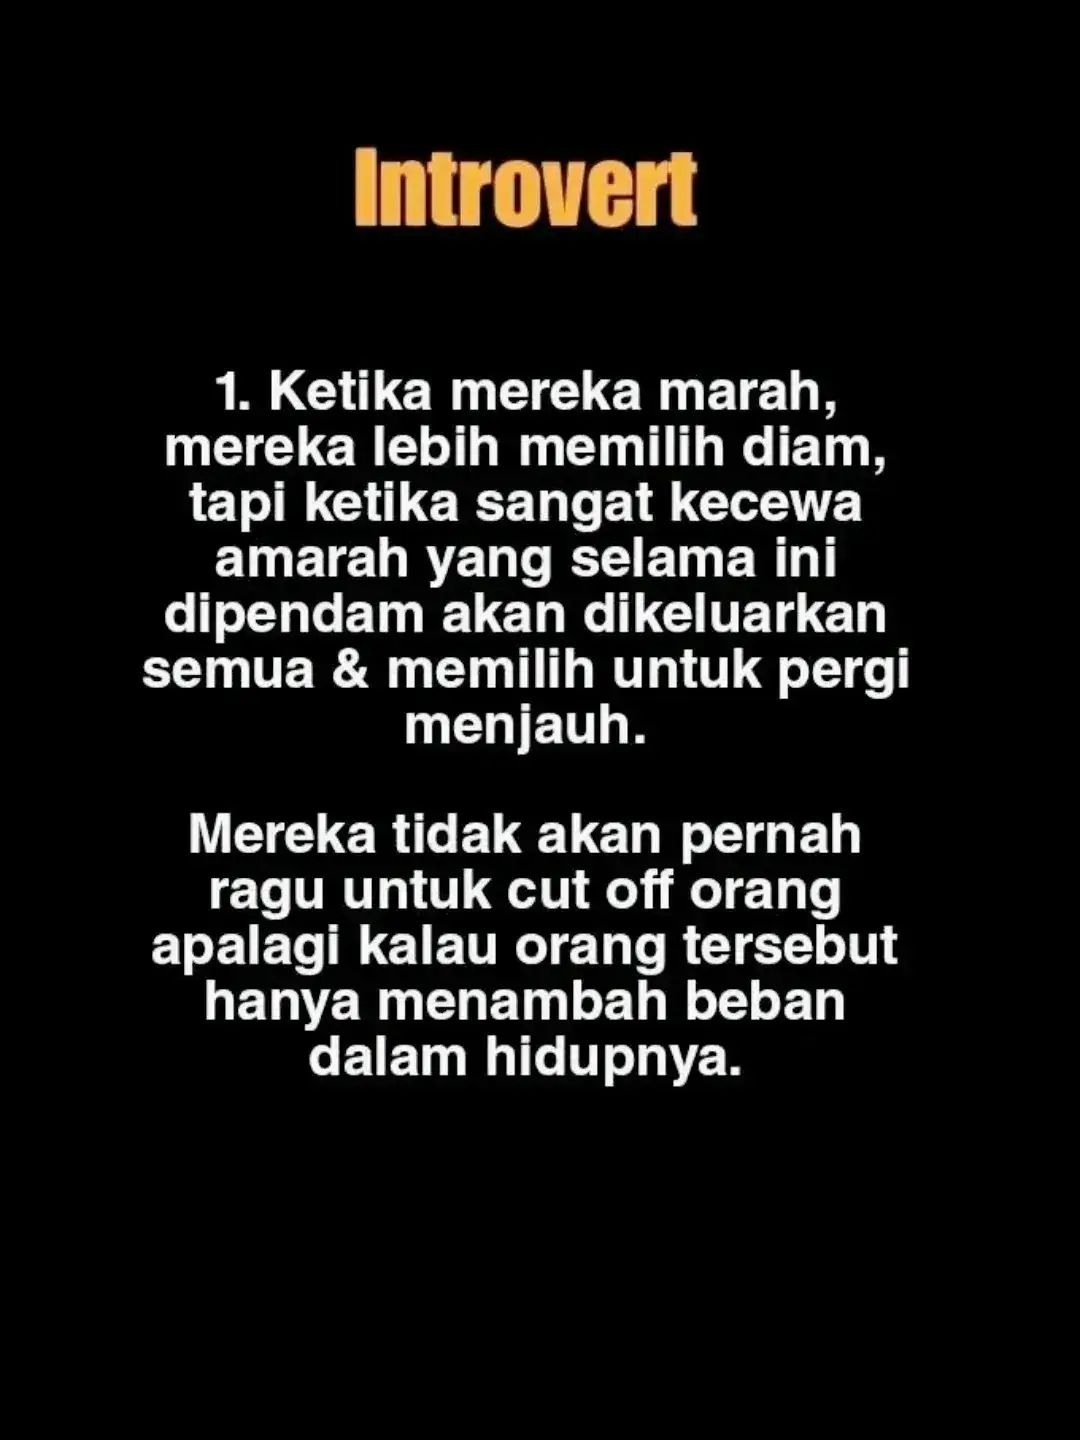 #introvert #introvertsbelike #introvertpersonality #personalitytest #fyyyyyyyyyyyyyyyy  #Lemon8 